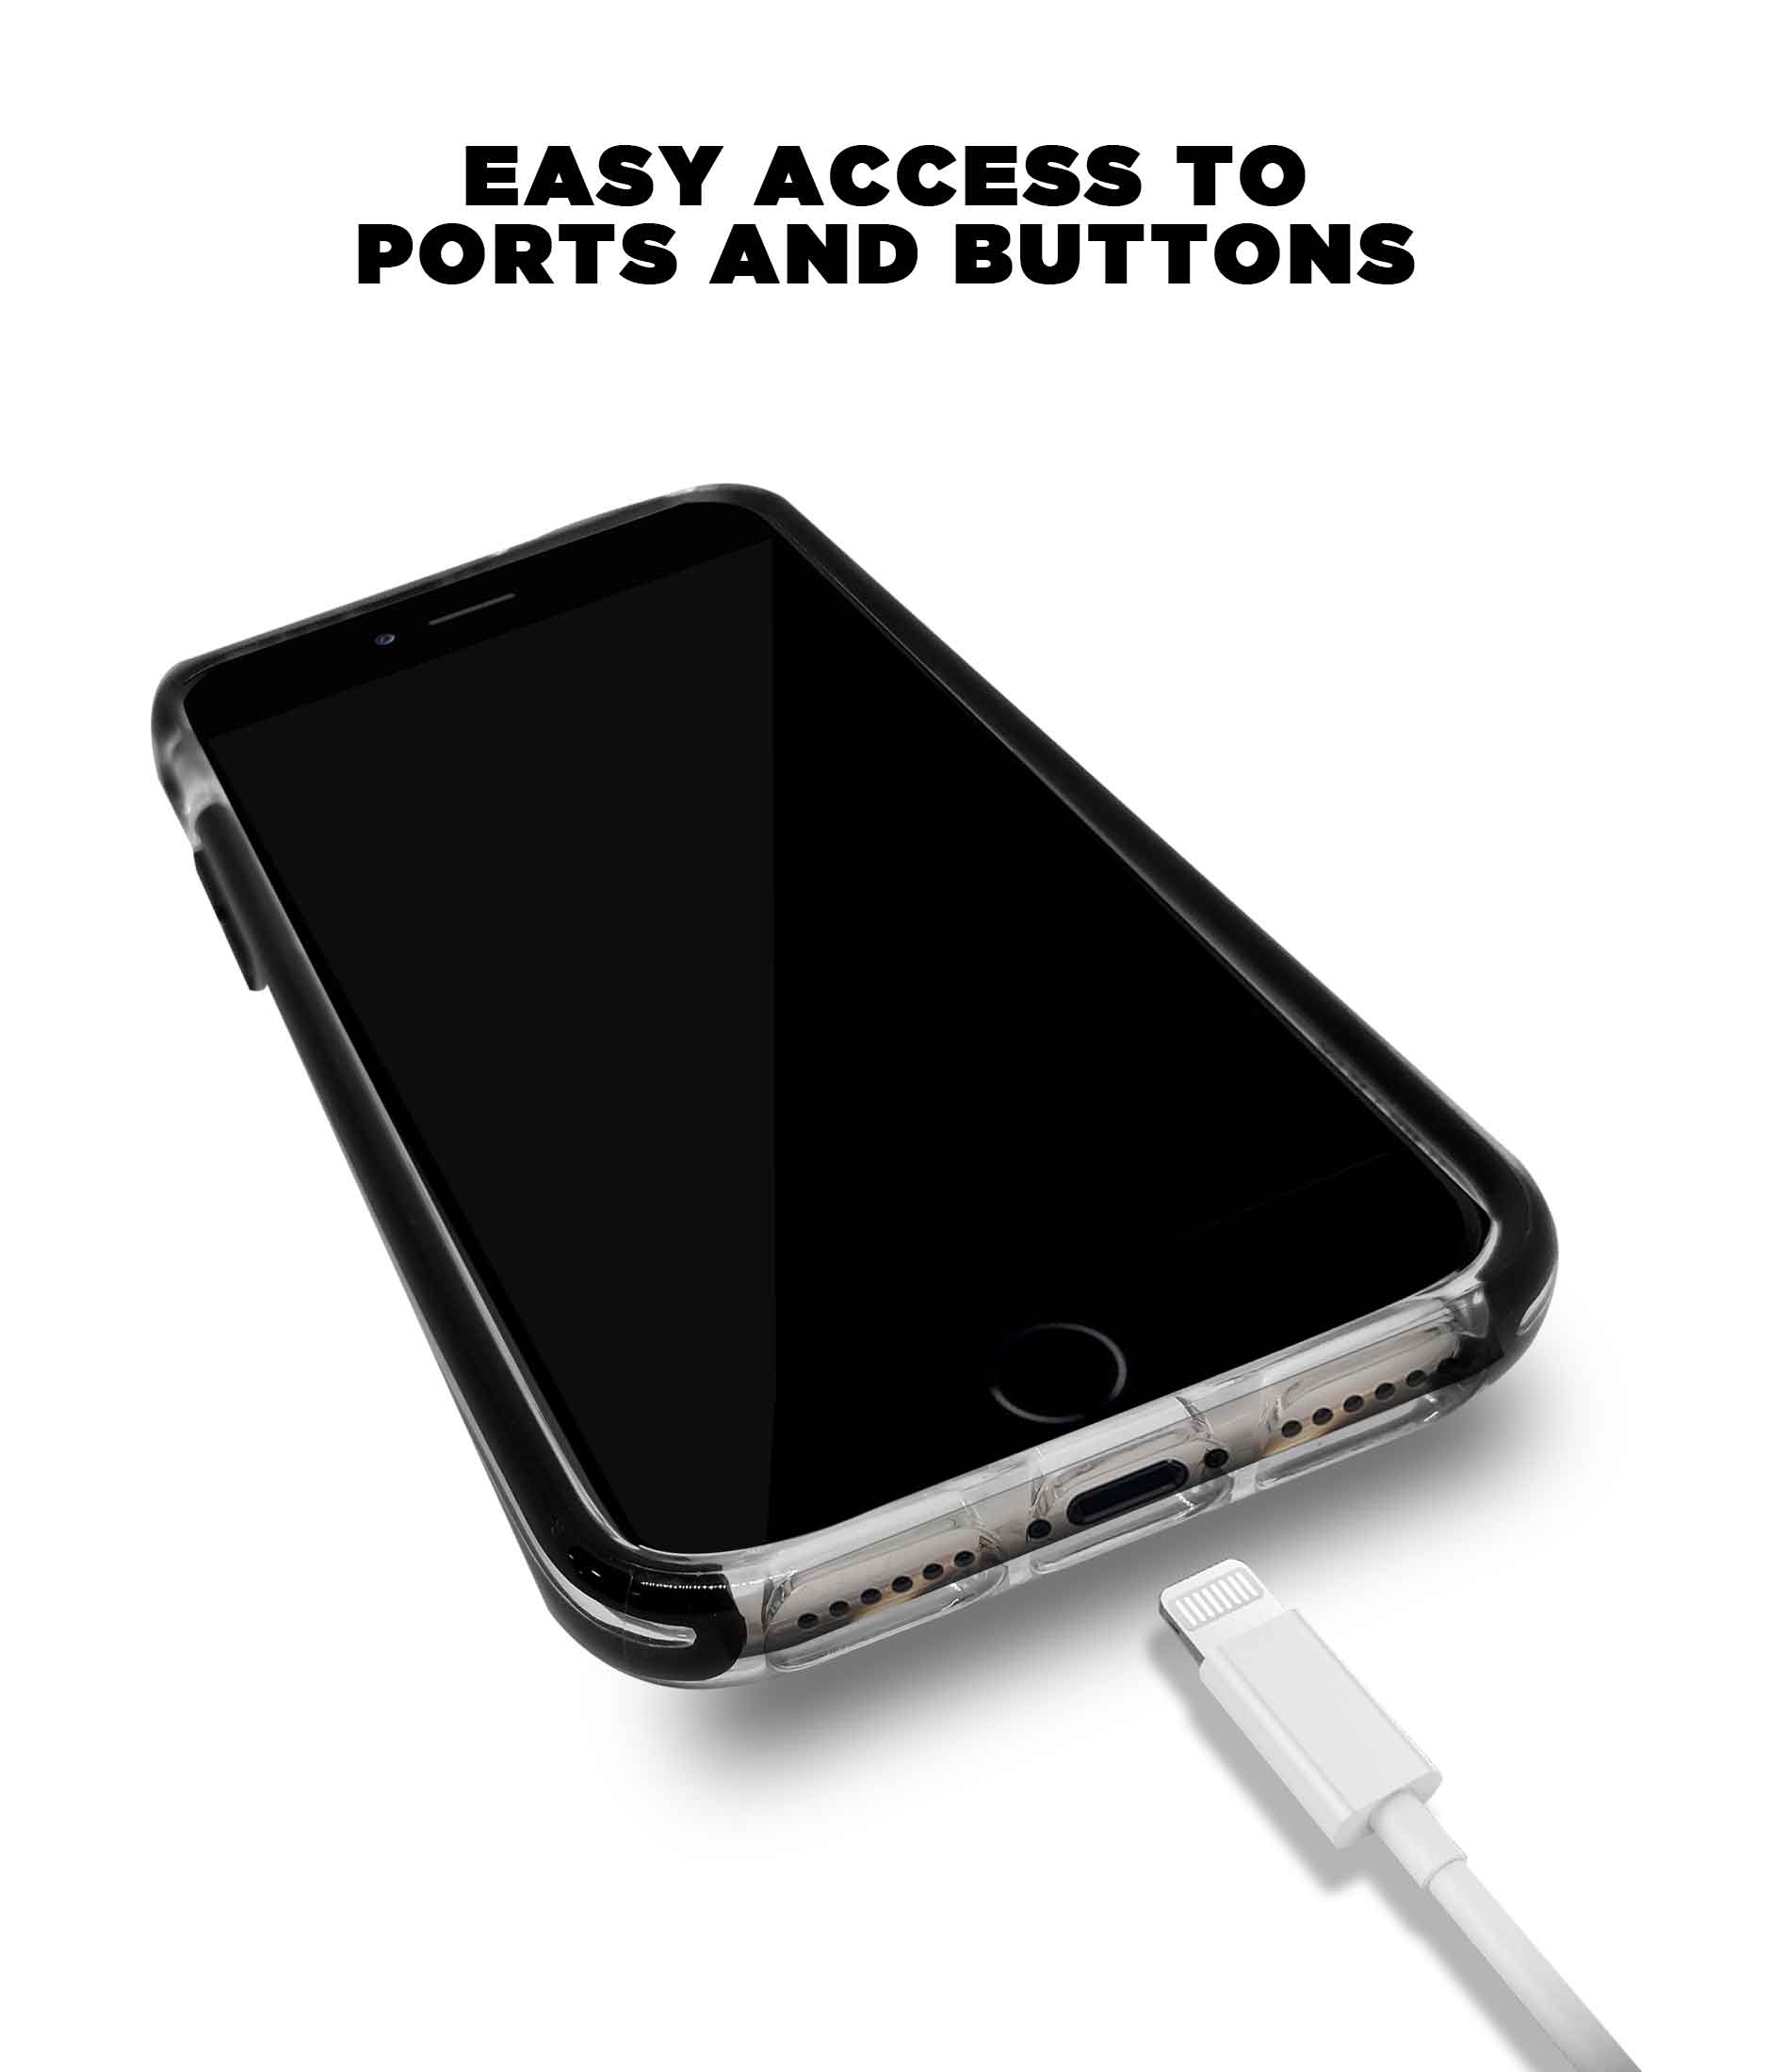 Illuminated Groot - Extreme Phone Case for iPhone 6S Plus